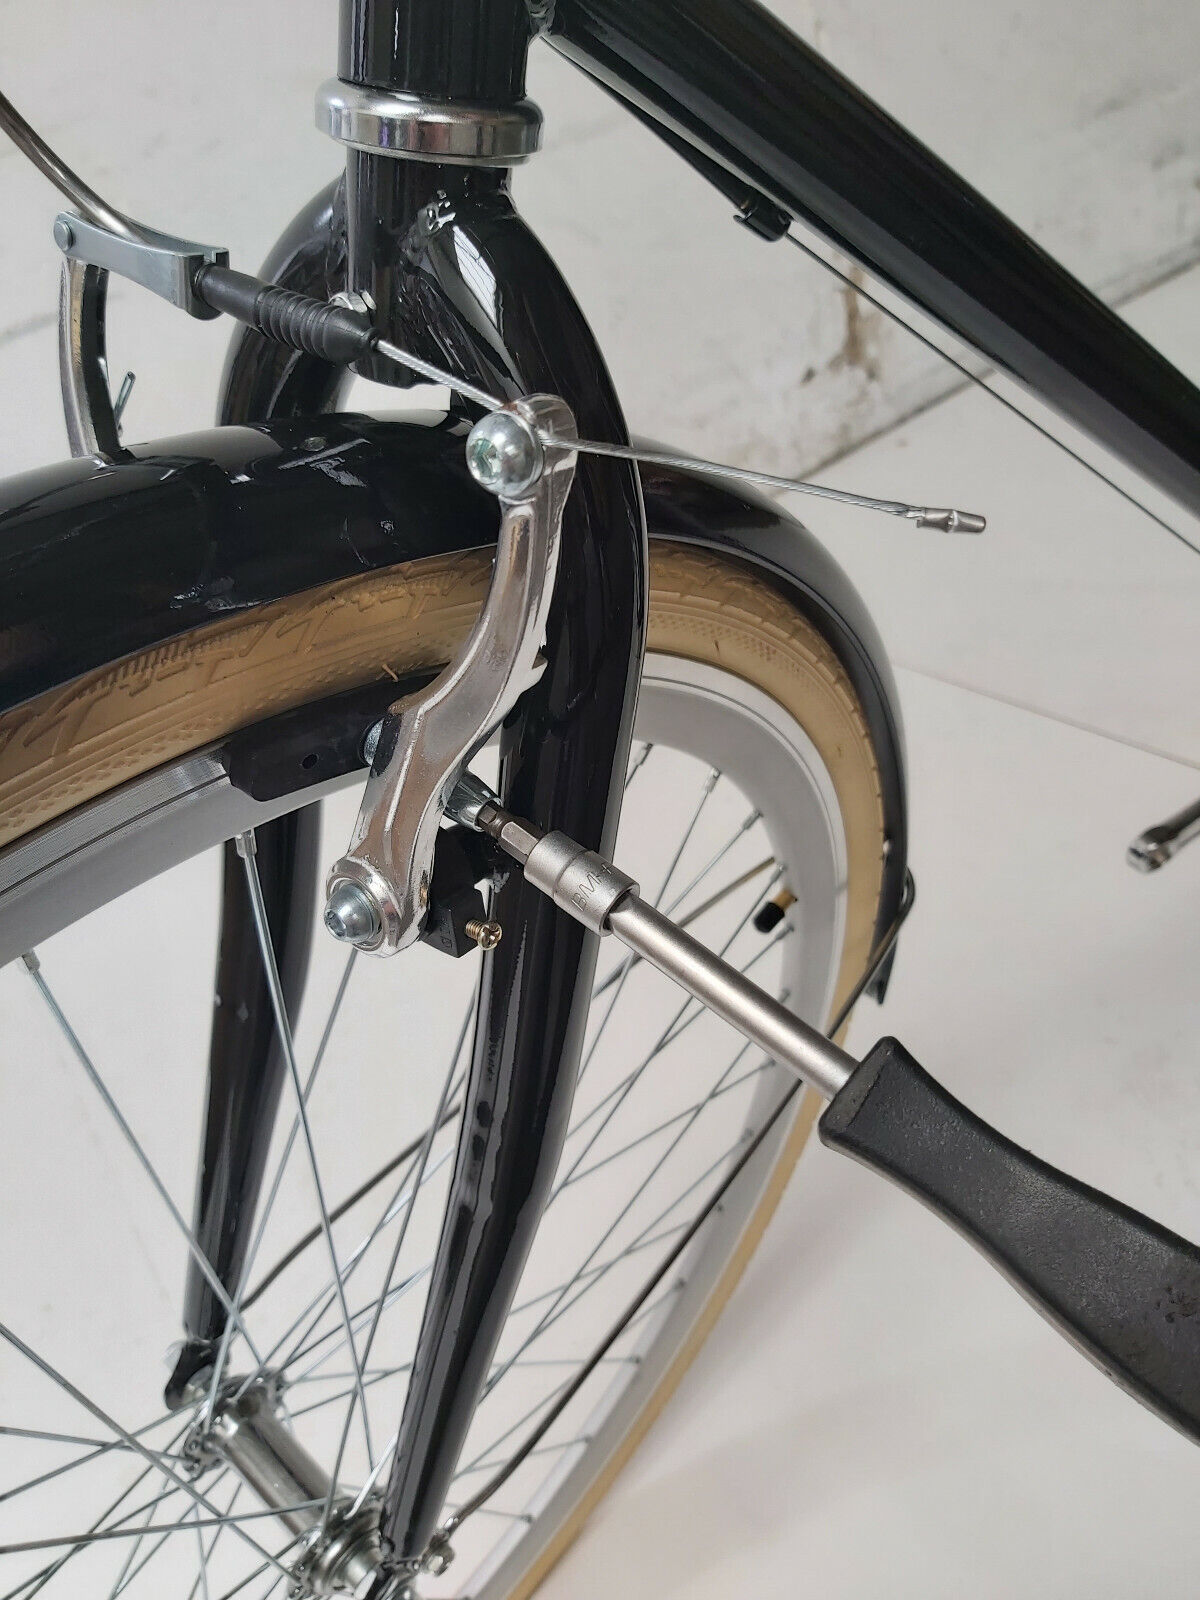 Damenrad Damenfahrrad Cityrad in schwarz mit Korb 28 Zoll Räder Lichter Neu